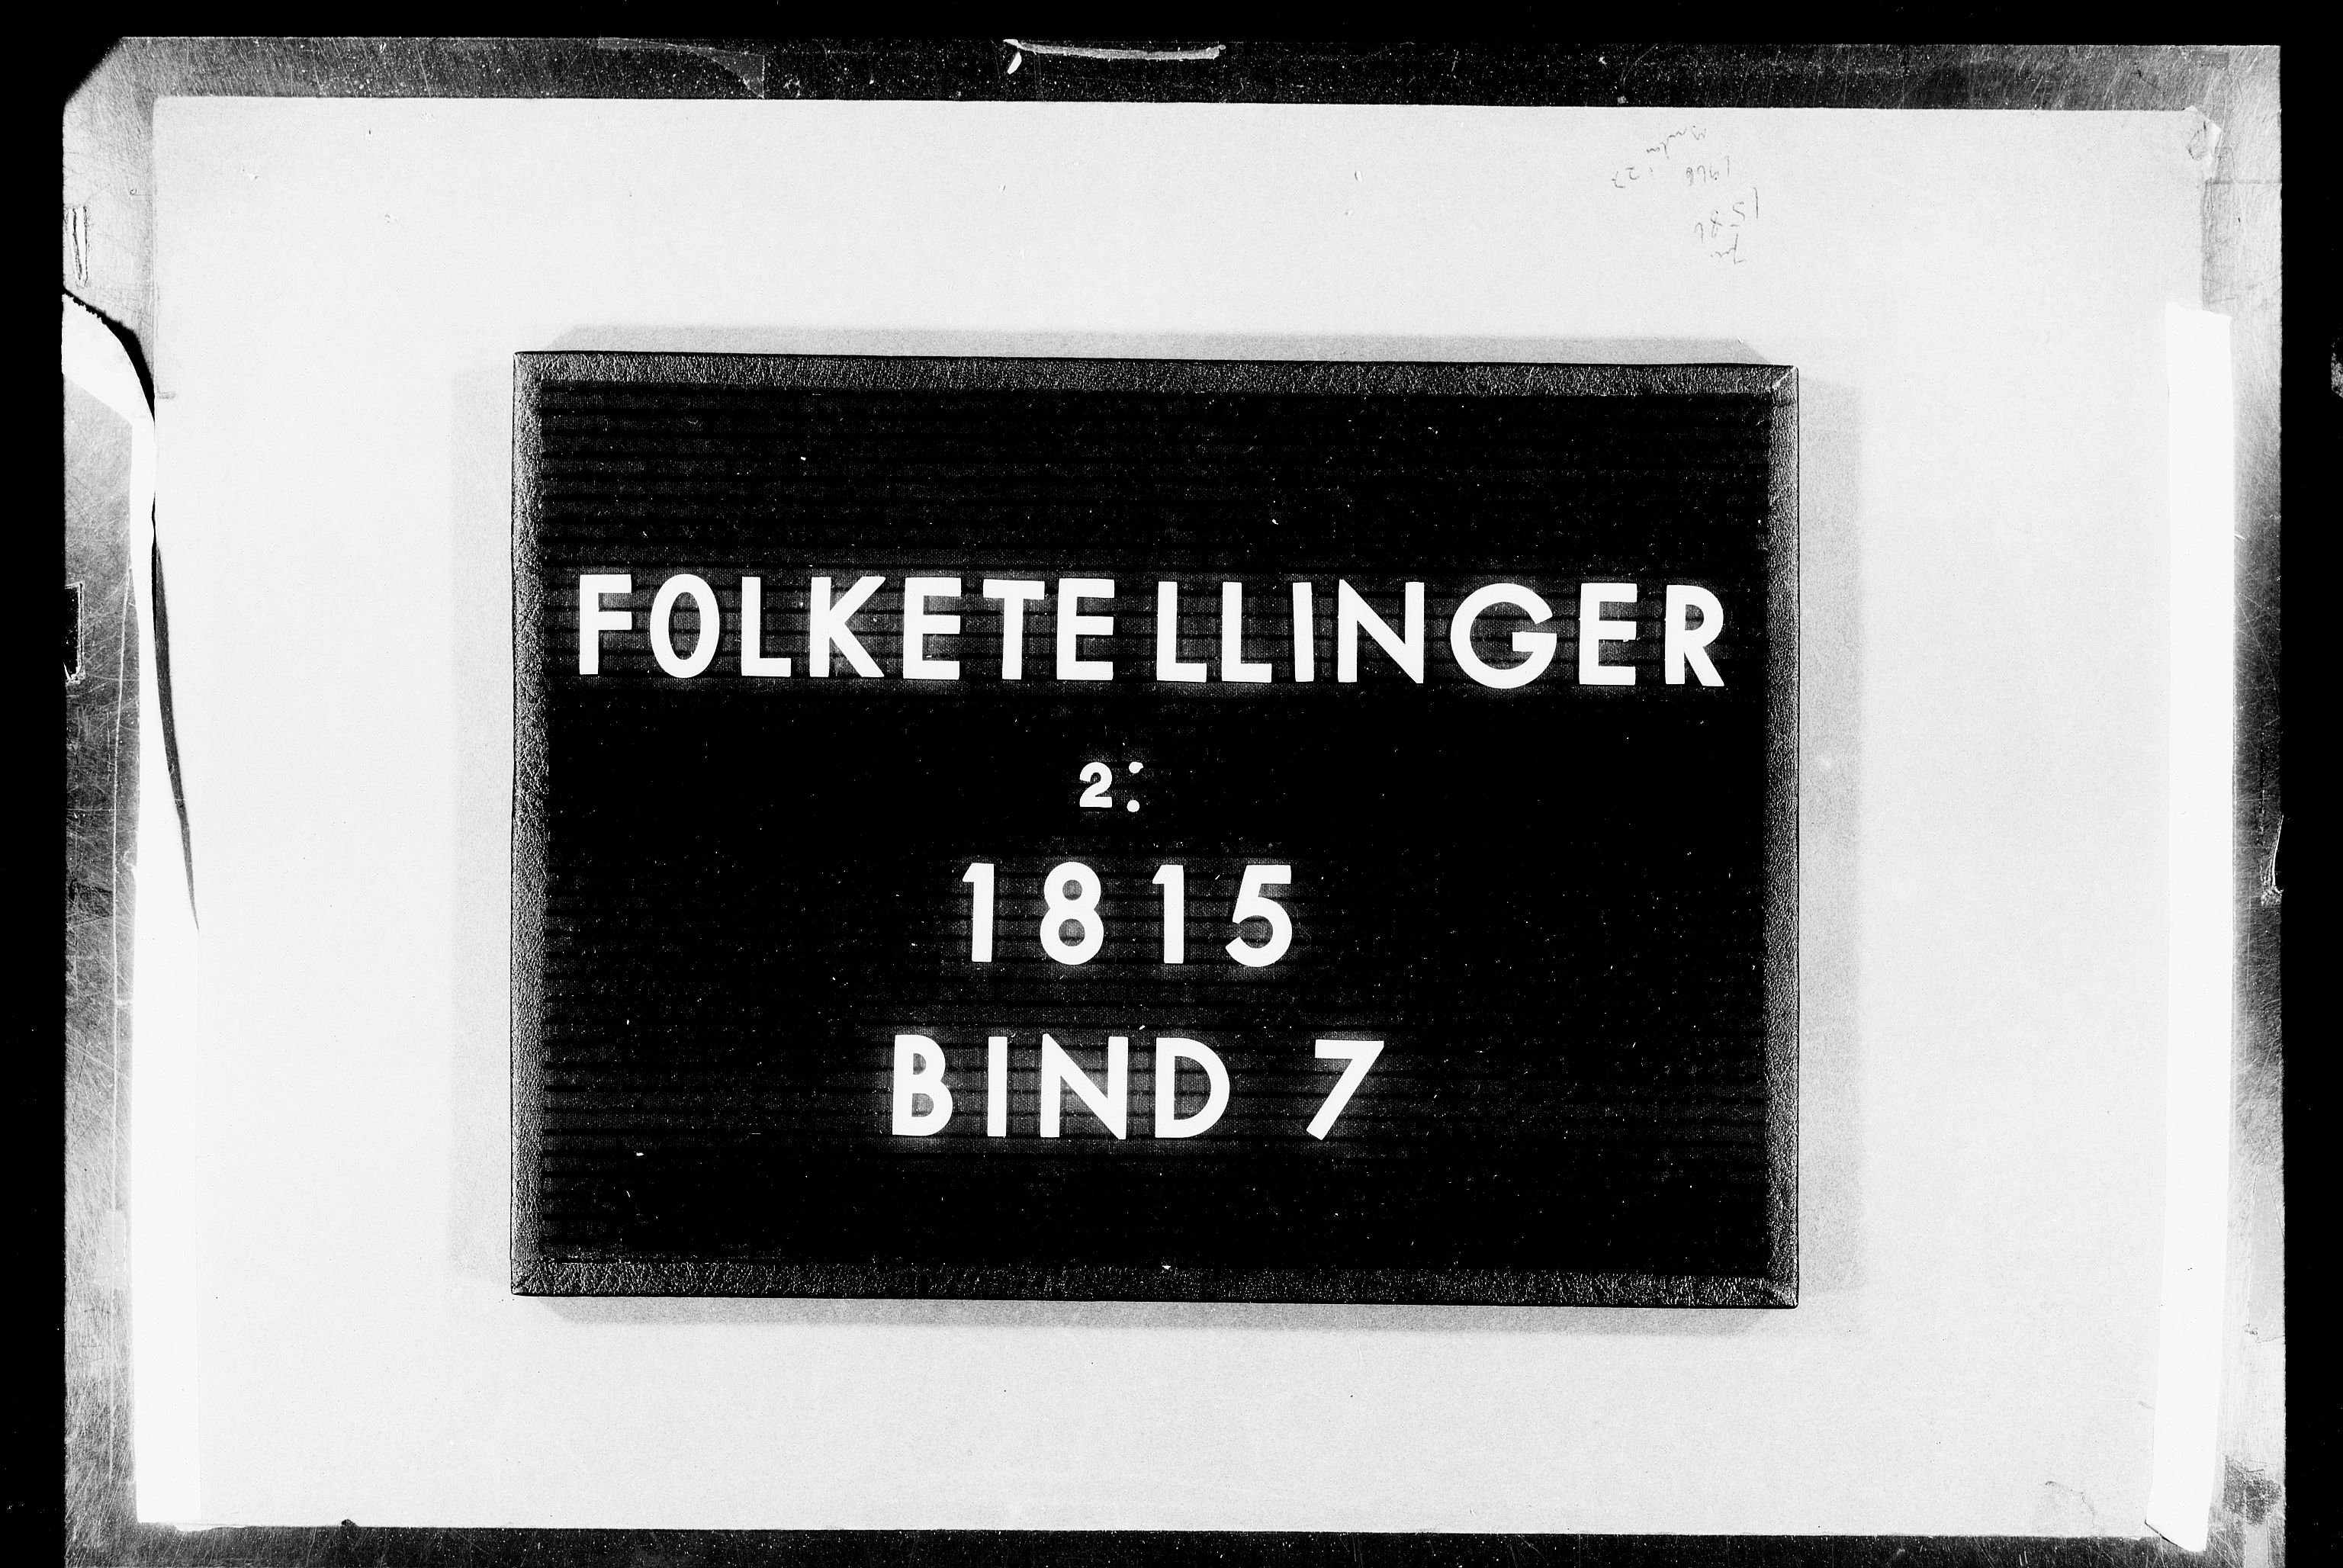 RA, Folketellingen 1815, bind 7: Folkemengdens bevegelse i Bergen stift og Trondheim stift, 1815